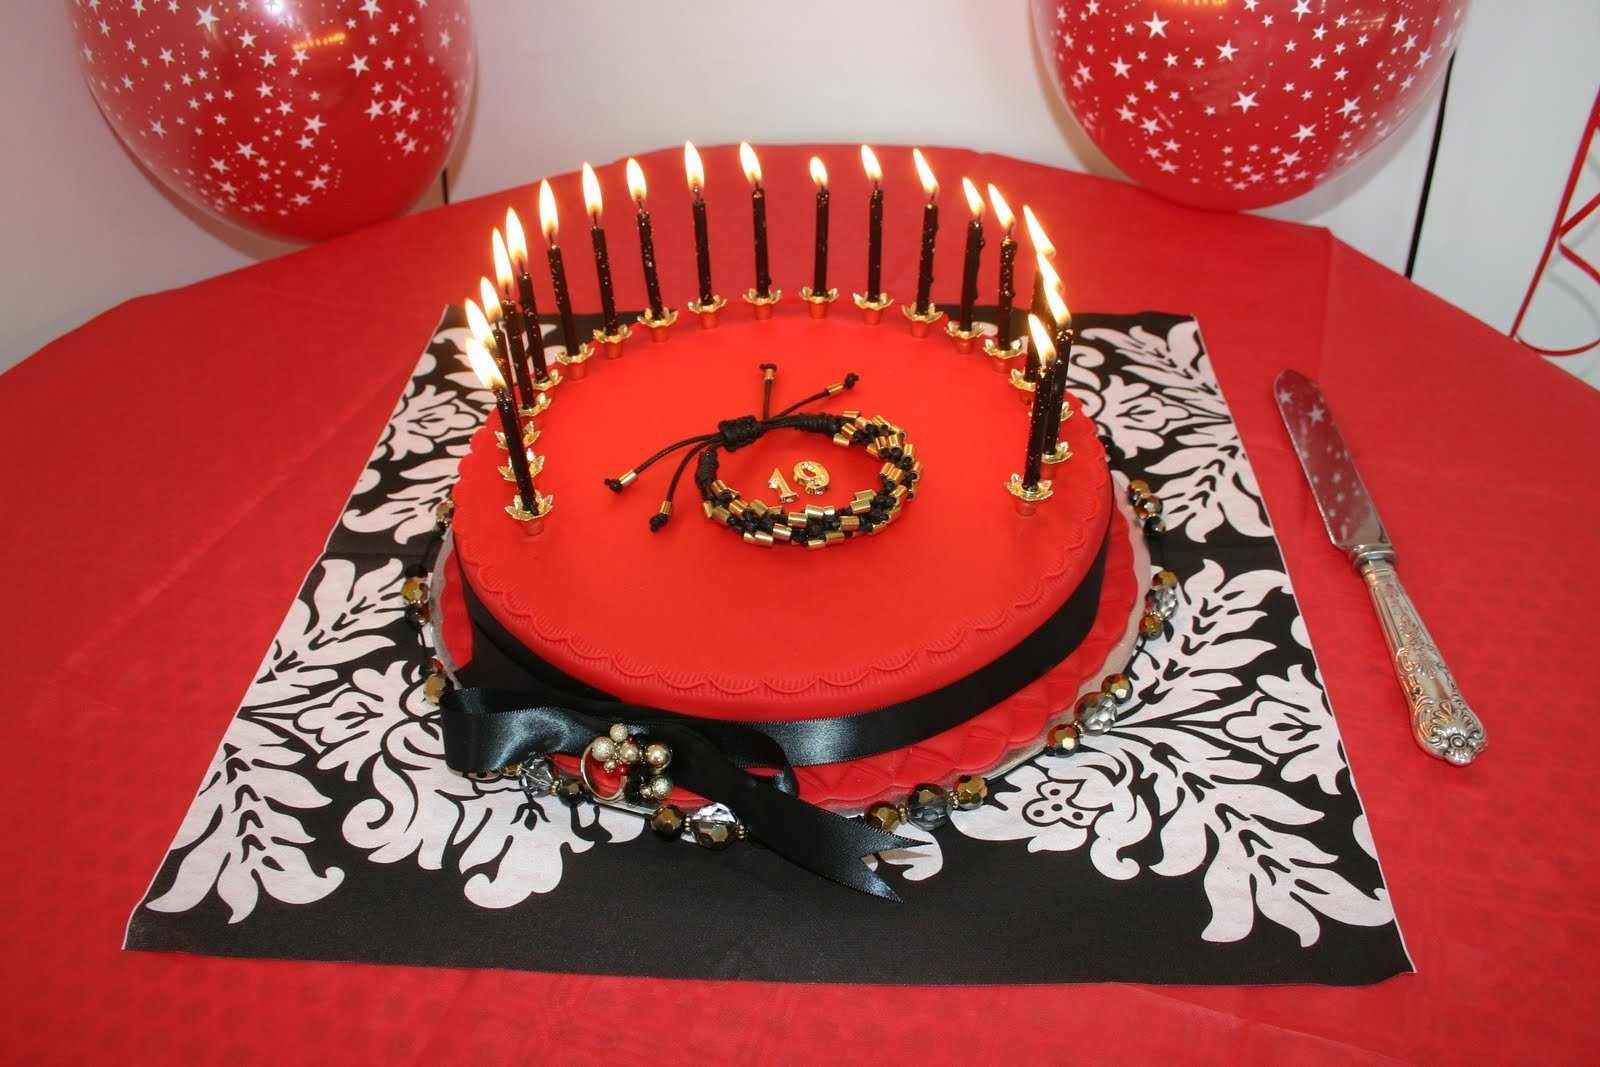 10 Great 19 Year Old Birthday Ideas birthday cake ideas 19 birthday cake happy images years old gifts 2022